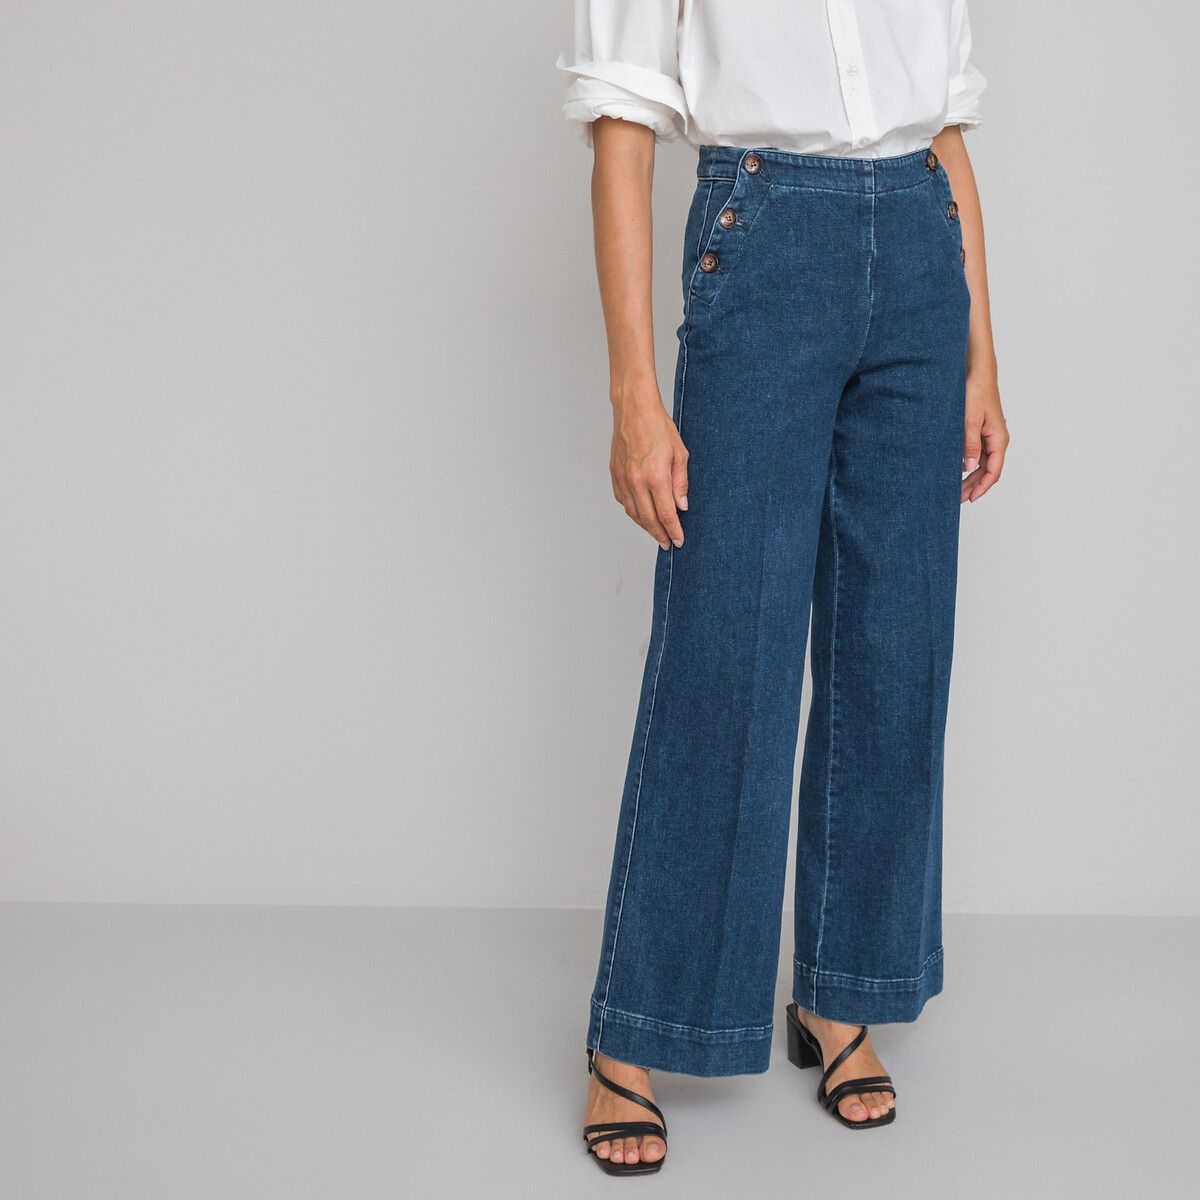 Wide Leg Sailor Jeans with High Waist, Length 31.5" | La Redoute (UK)